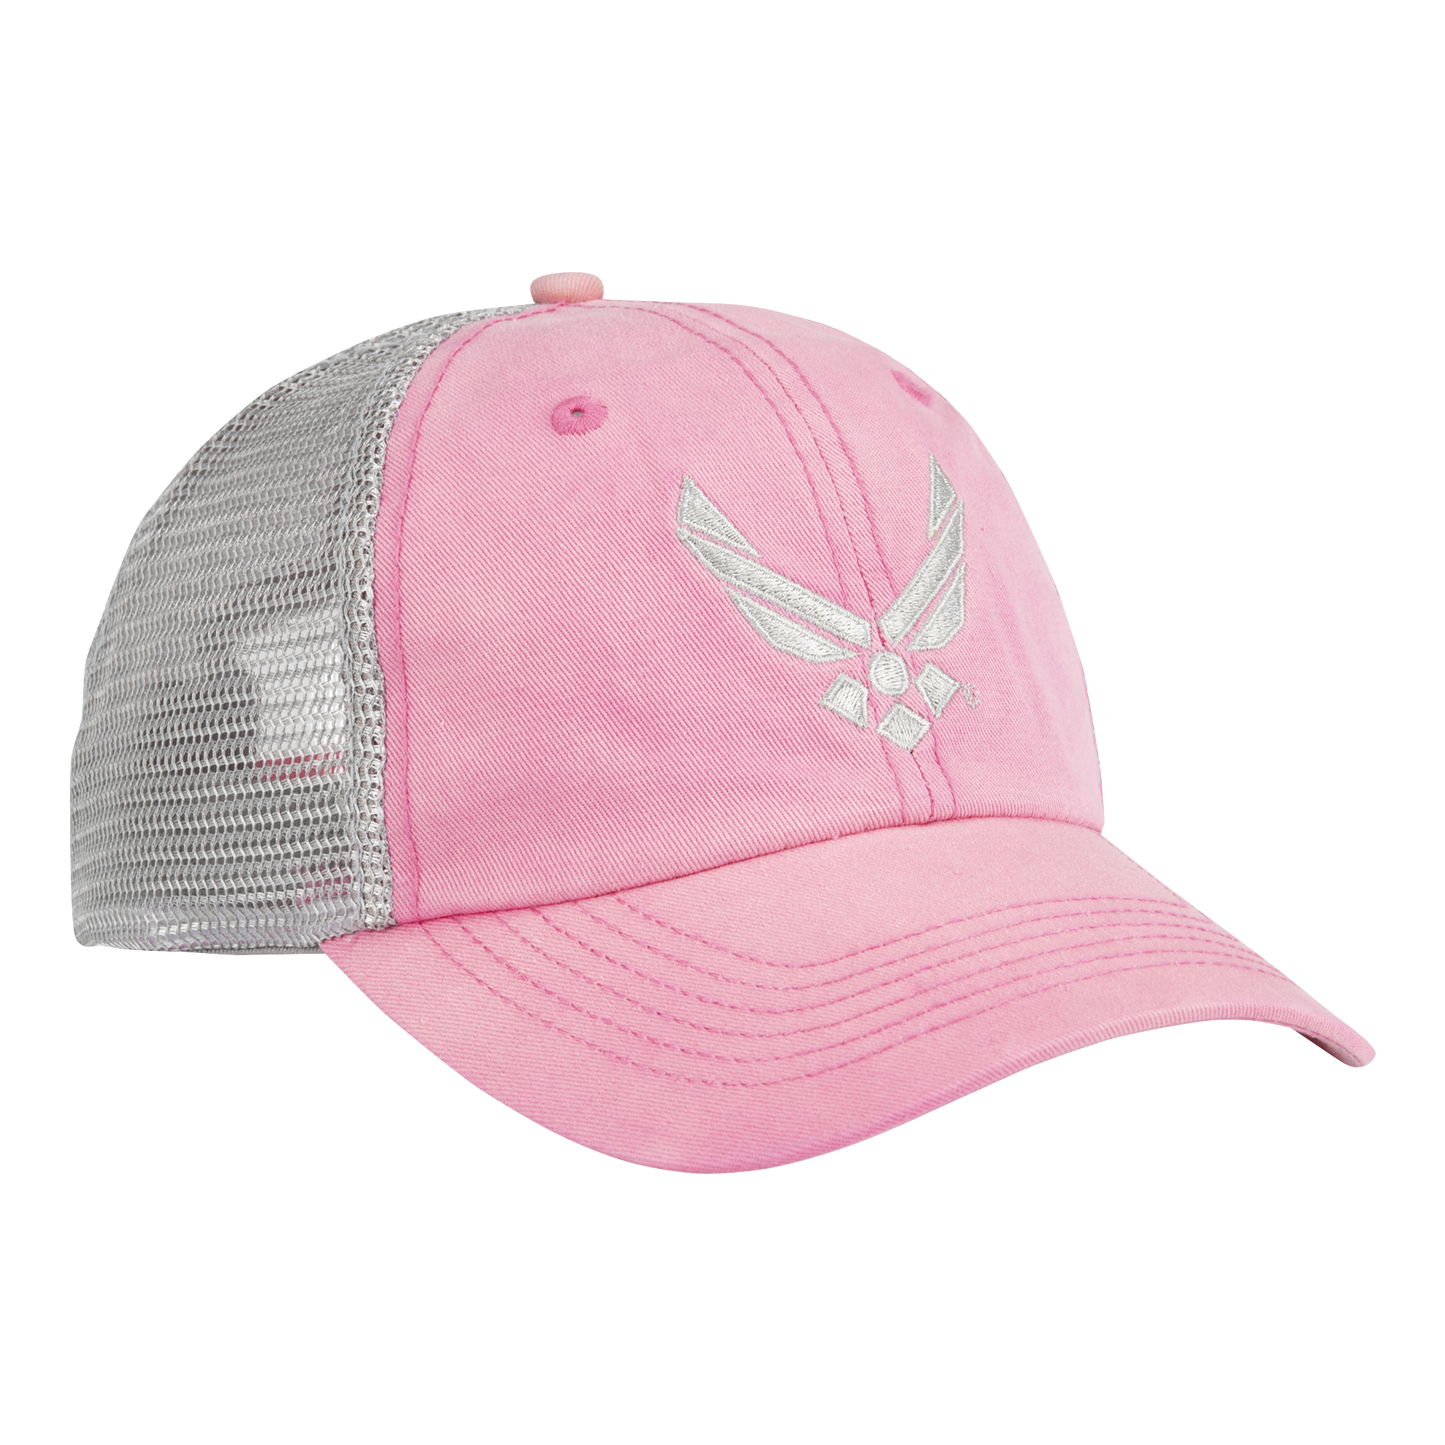 Washed Pink Mesh Air Force Wings logo Cap